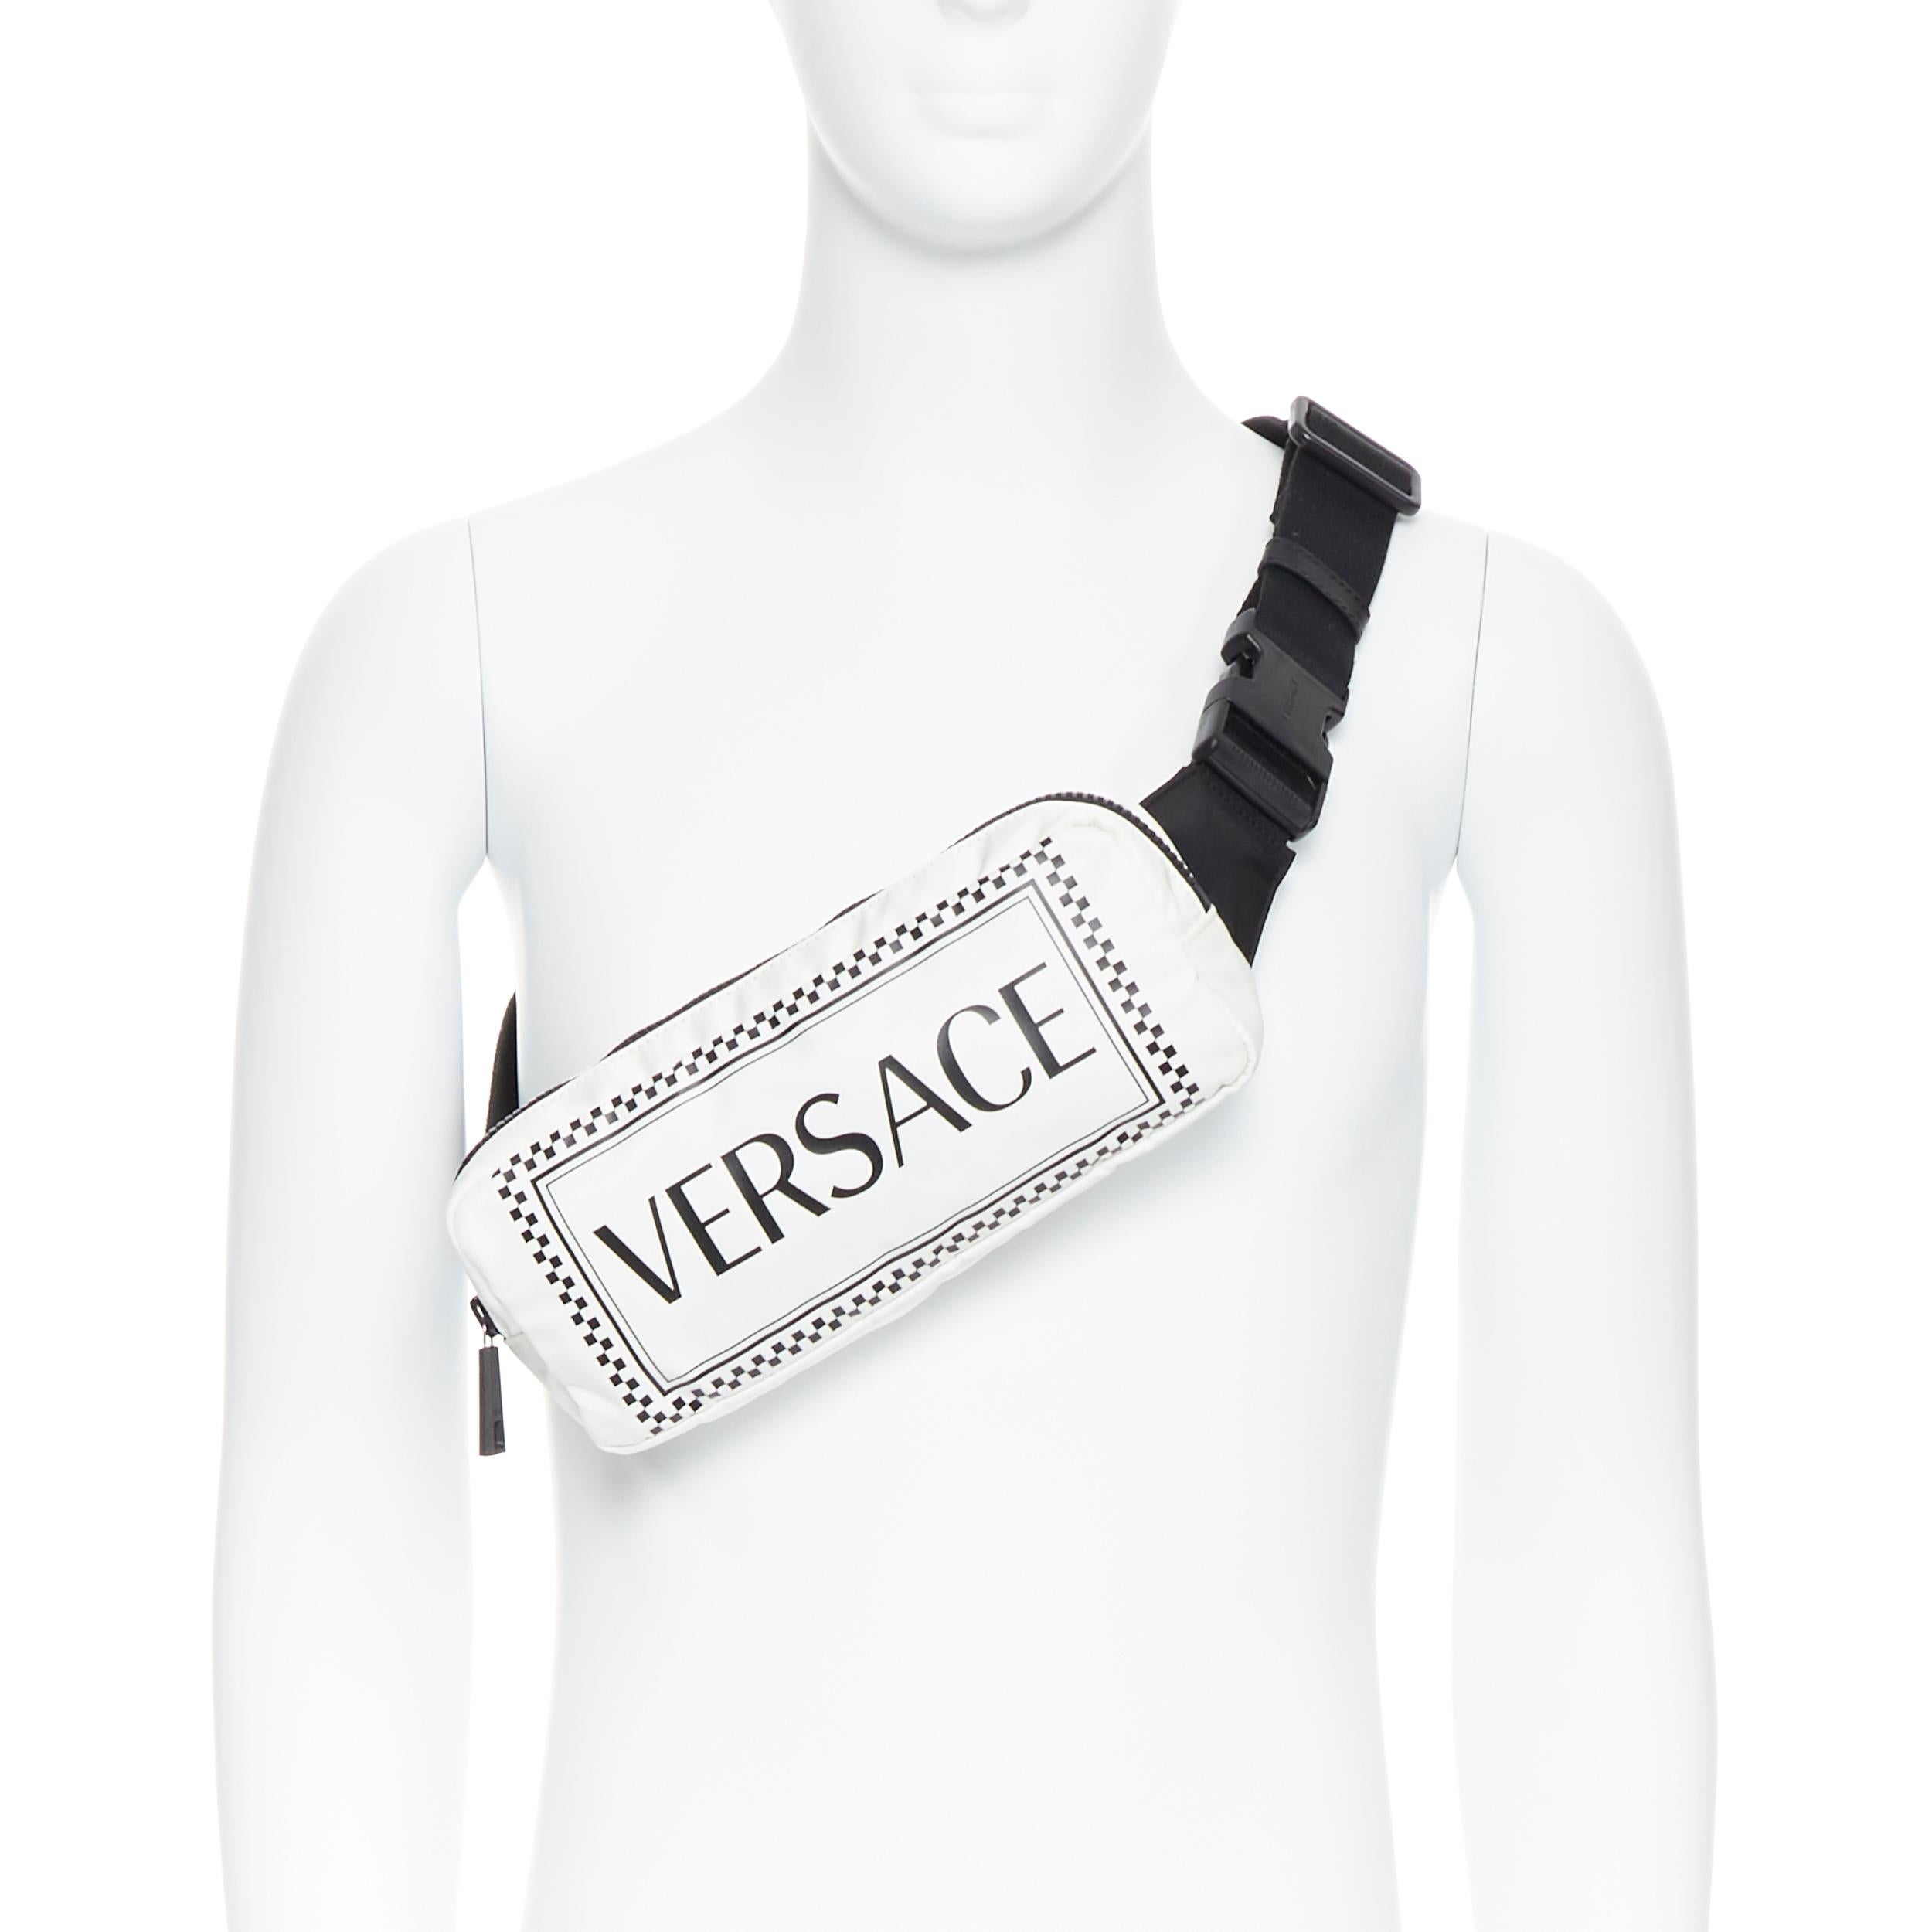 new VERSACE 90's Vintage Box Logo print white nylon sports strap waist belt bag
Brand: Versace
Designer: Donatella Versace
Collection: Pre-Fall 2019
Model Name / Style: Belt bag
Material: Nylon
Color: White
Pattern: Solid
Closure: Zip
Extra Detail: